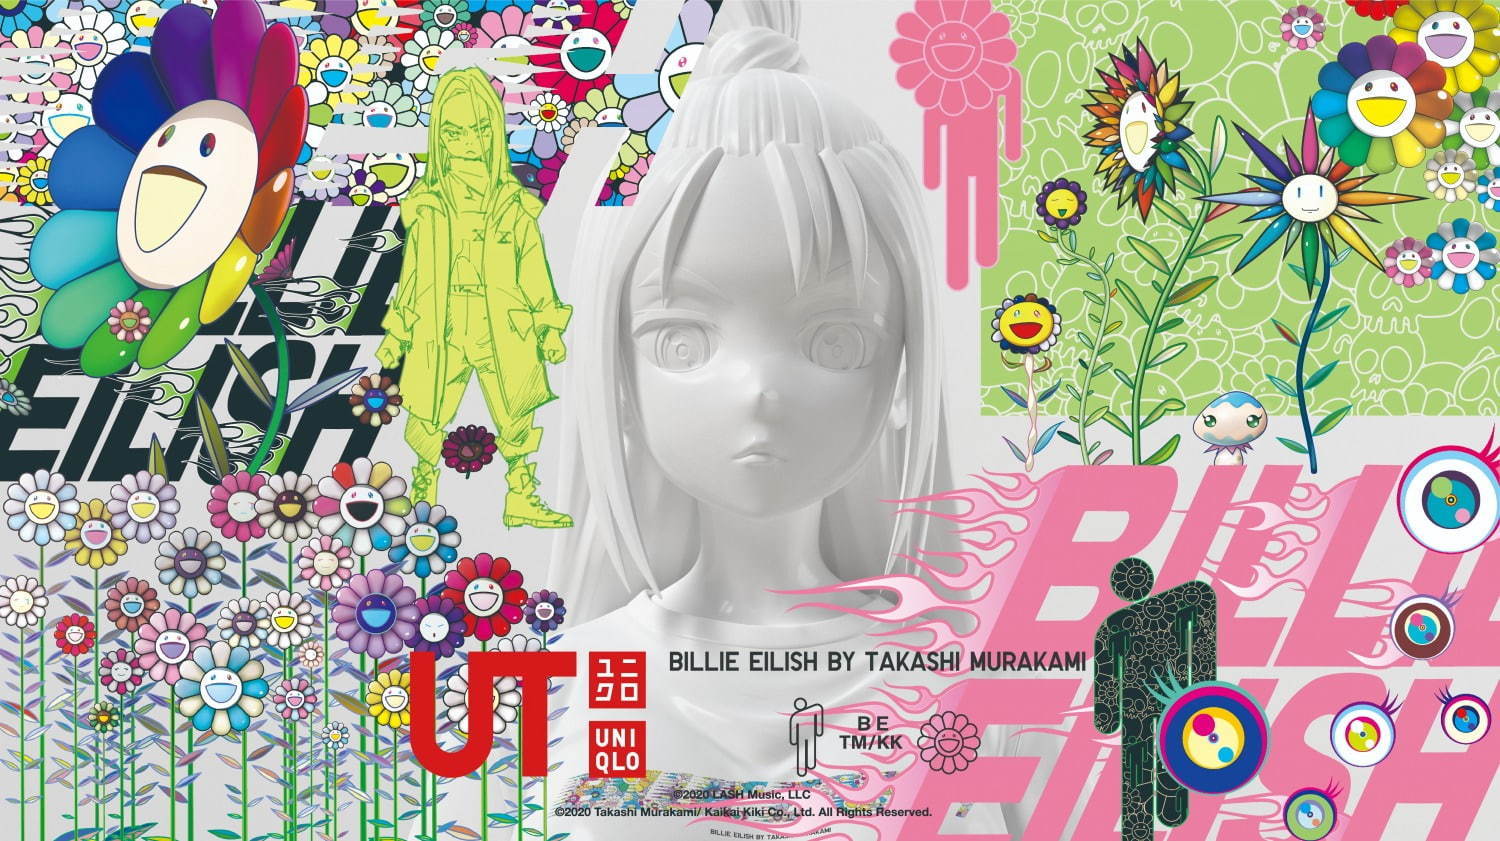 Takashi Murakami On His Uniqlo Collaboration and the Detail